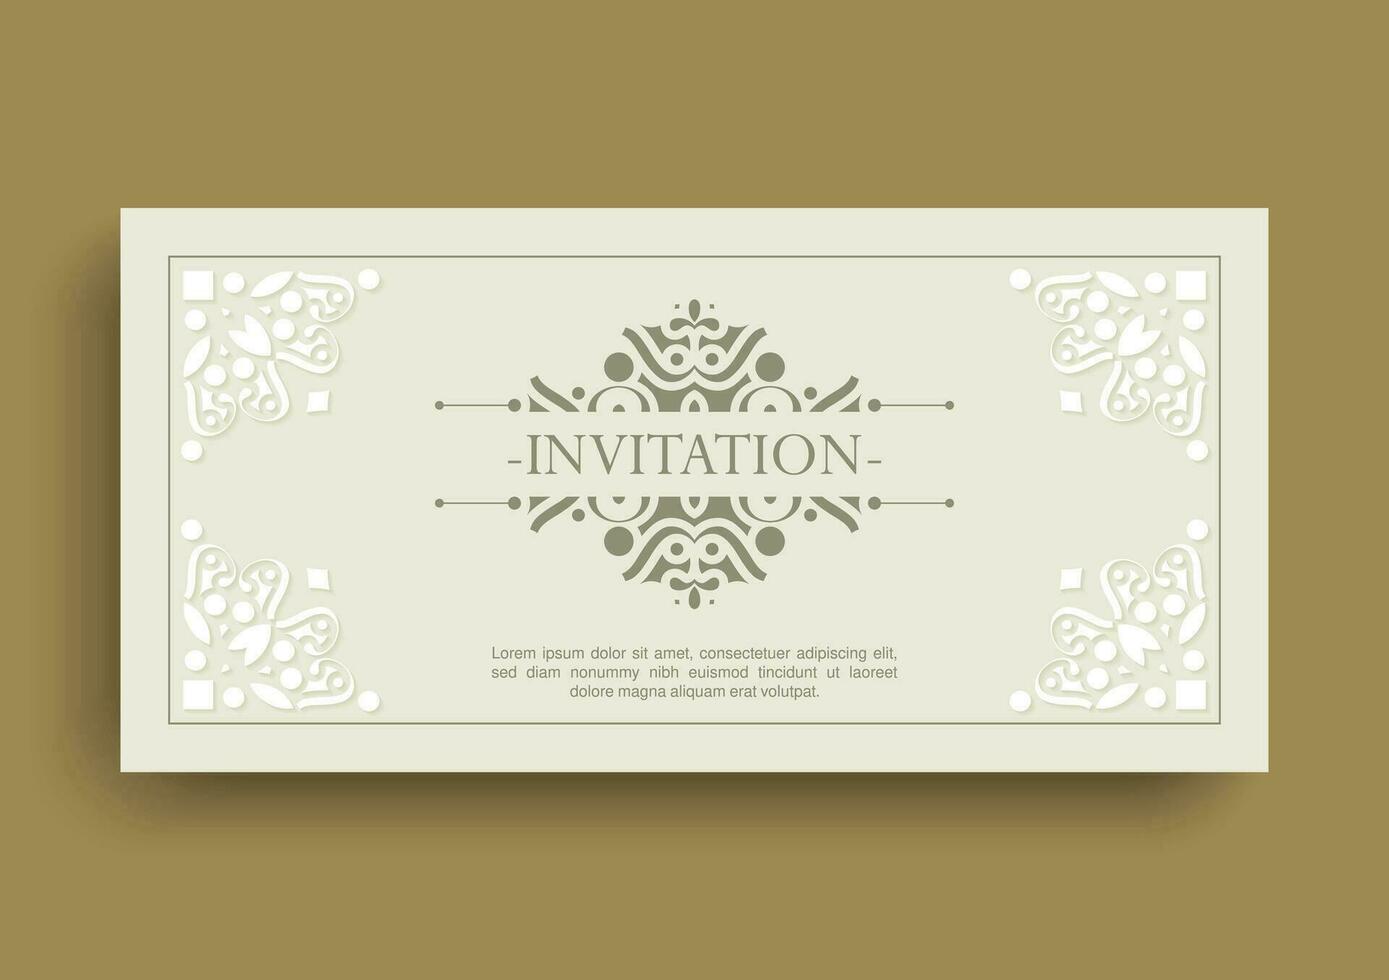 carte d'invitation vector design style vintage